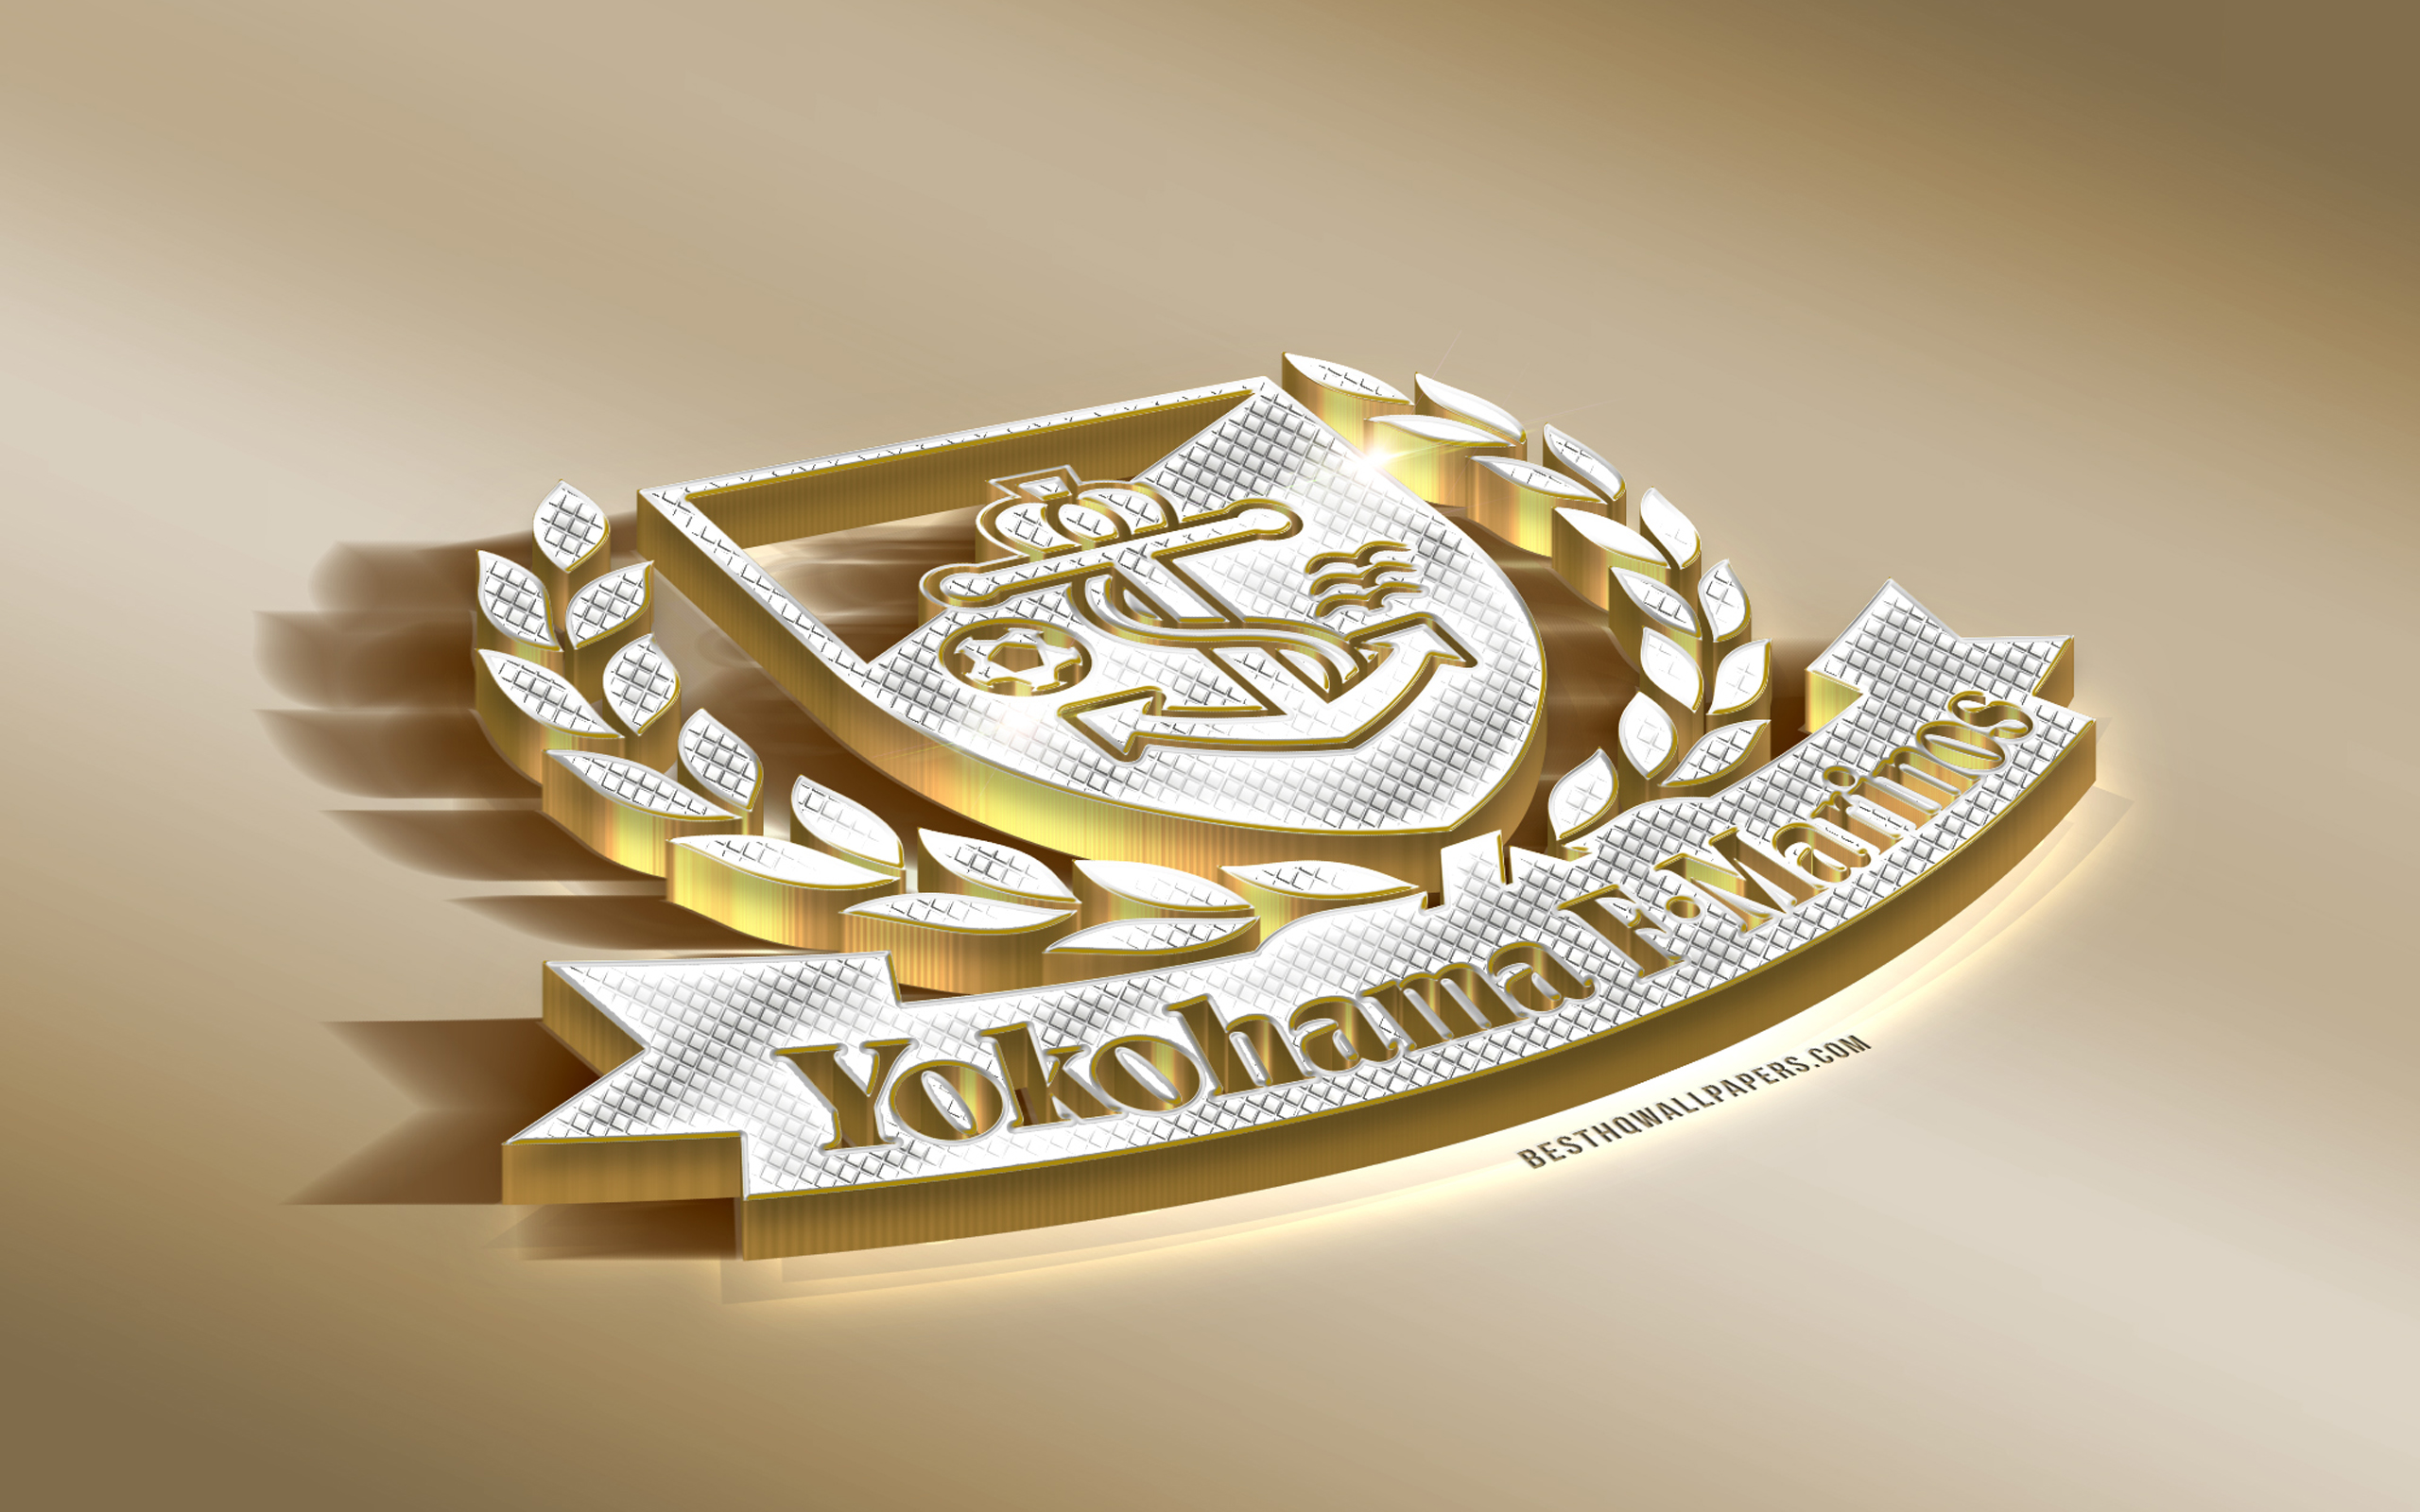 Download Wallpapers Yokohama F Marinos Japanese Football Club Golden Silver Logo Yokohama Japan J1 League 3d Golden Emblem Creative 3d Art Football For Desktop With Resolution 2560x1600 High Quality Hd Pictures Wallpapers